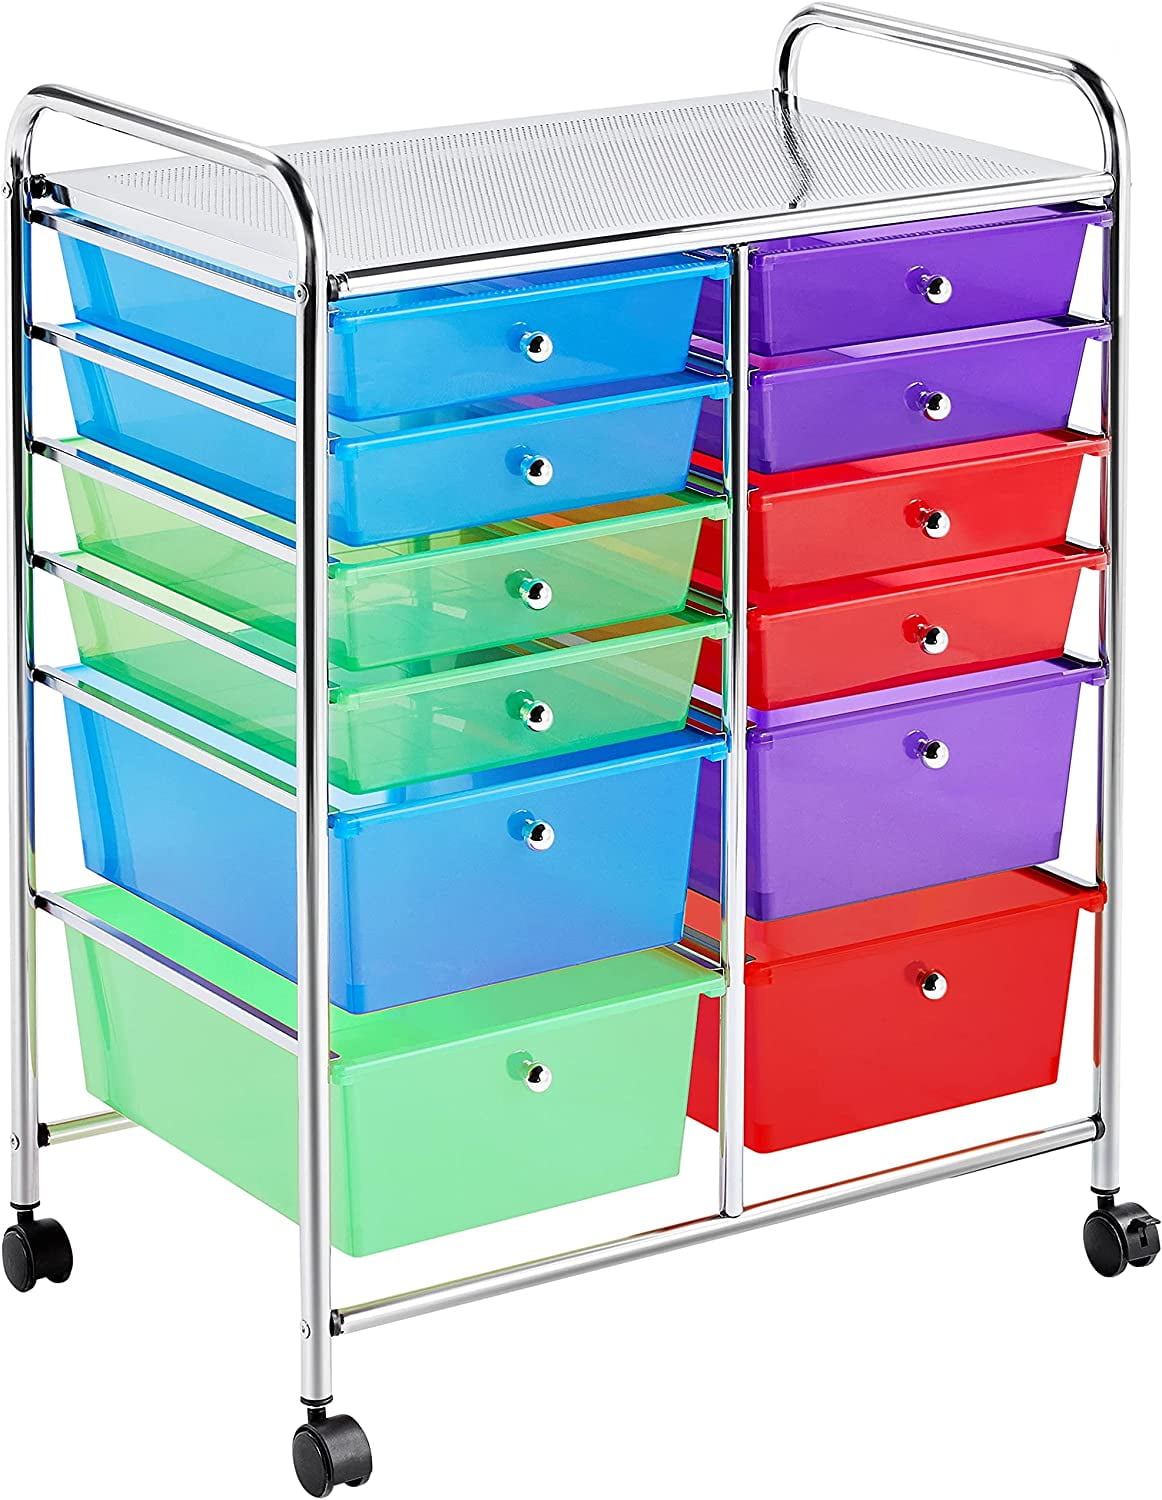 GreenCo Greenpro Wall Mount Hardware and Craft Storage Cabinet Drawer  Organizer, Home Organization and Storage